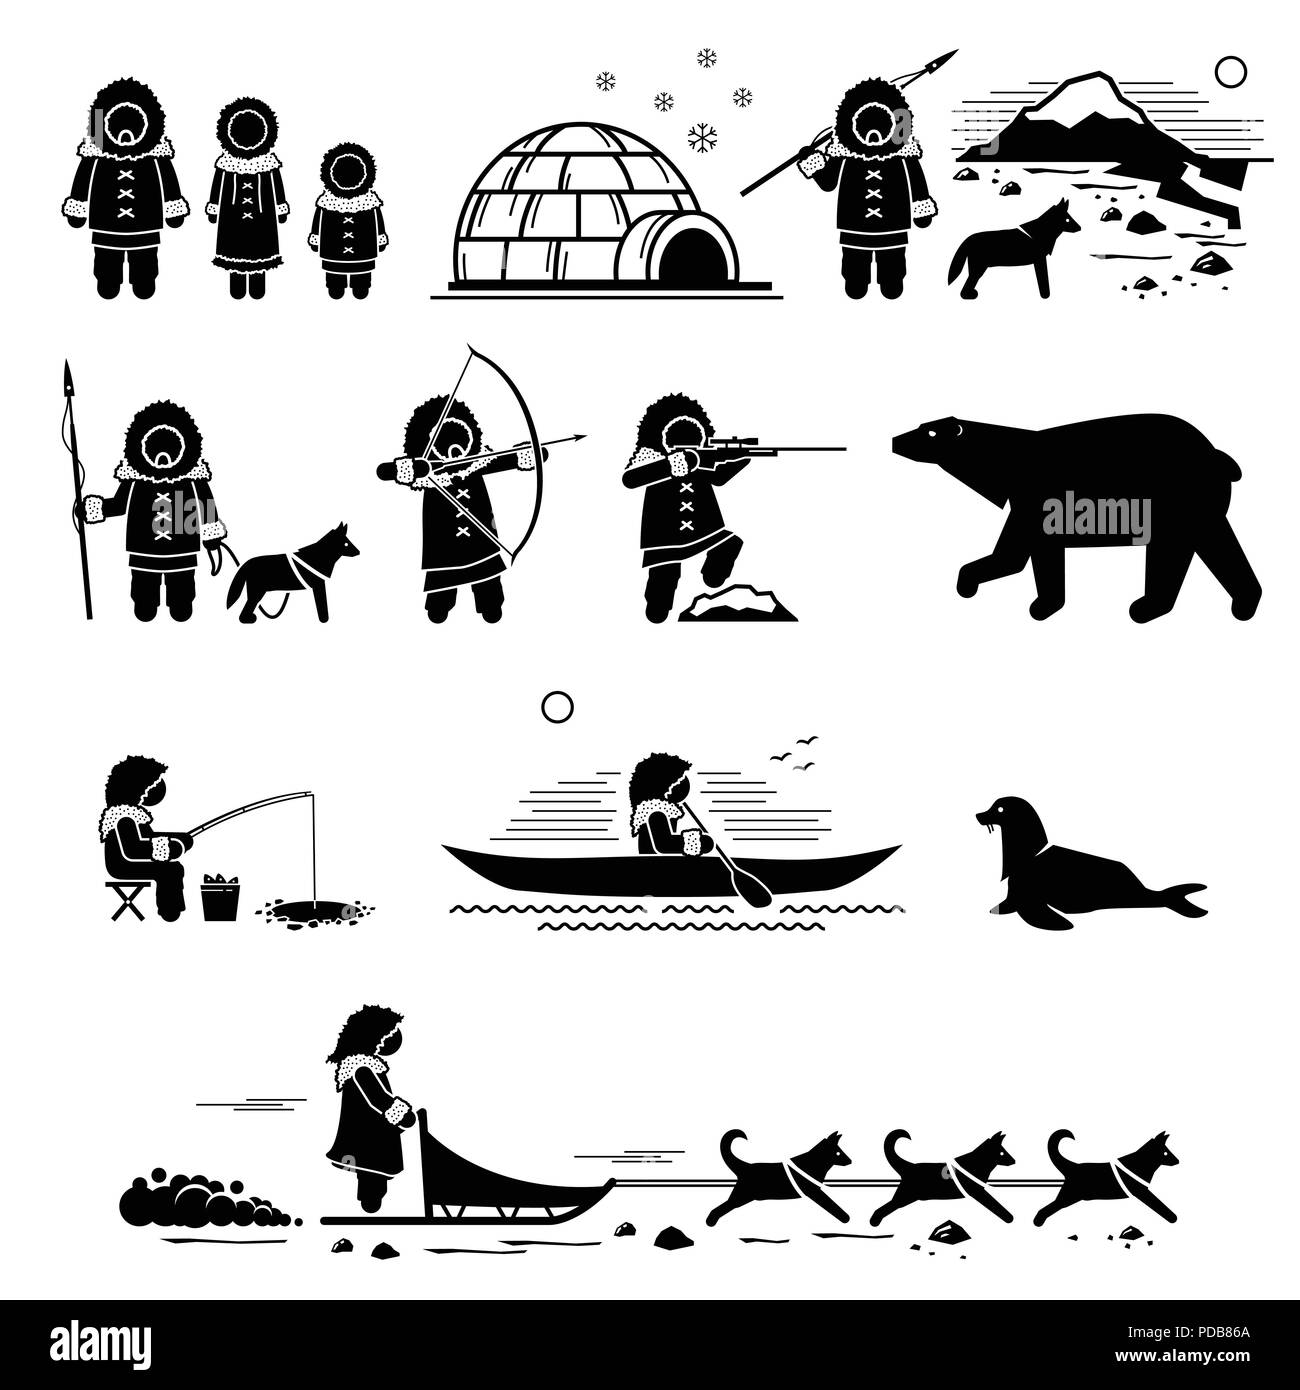 Eskimo people, lifestyle, and animals. Stick figure pictogram depicts Eskimo human, igloo, hunting, fishing, polar bear, husky dog, sled dogs, seal. Stock Vector